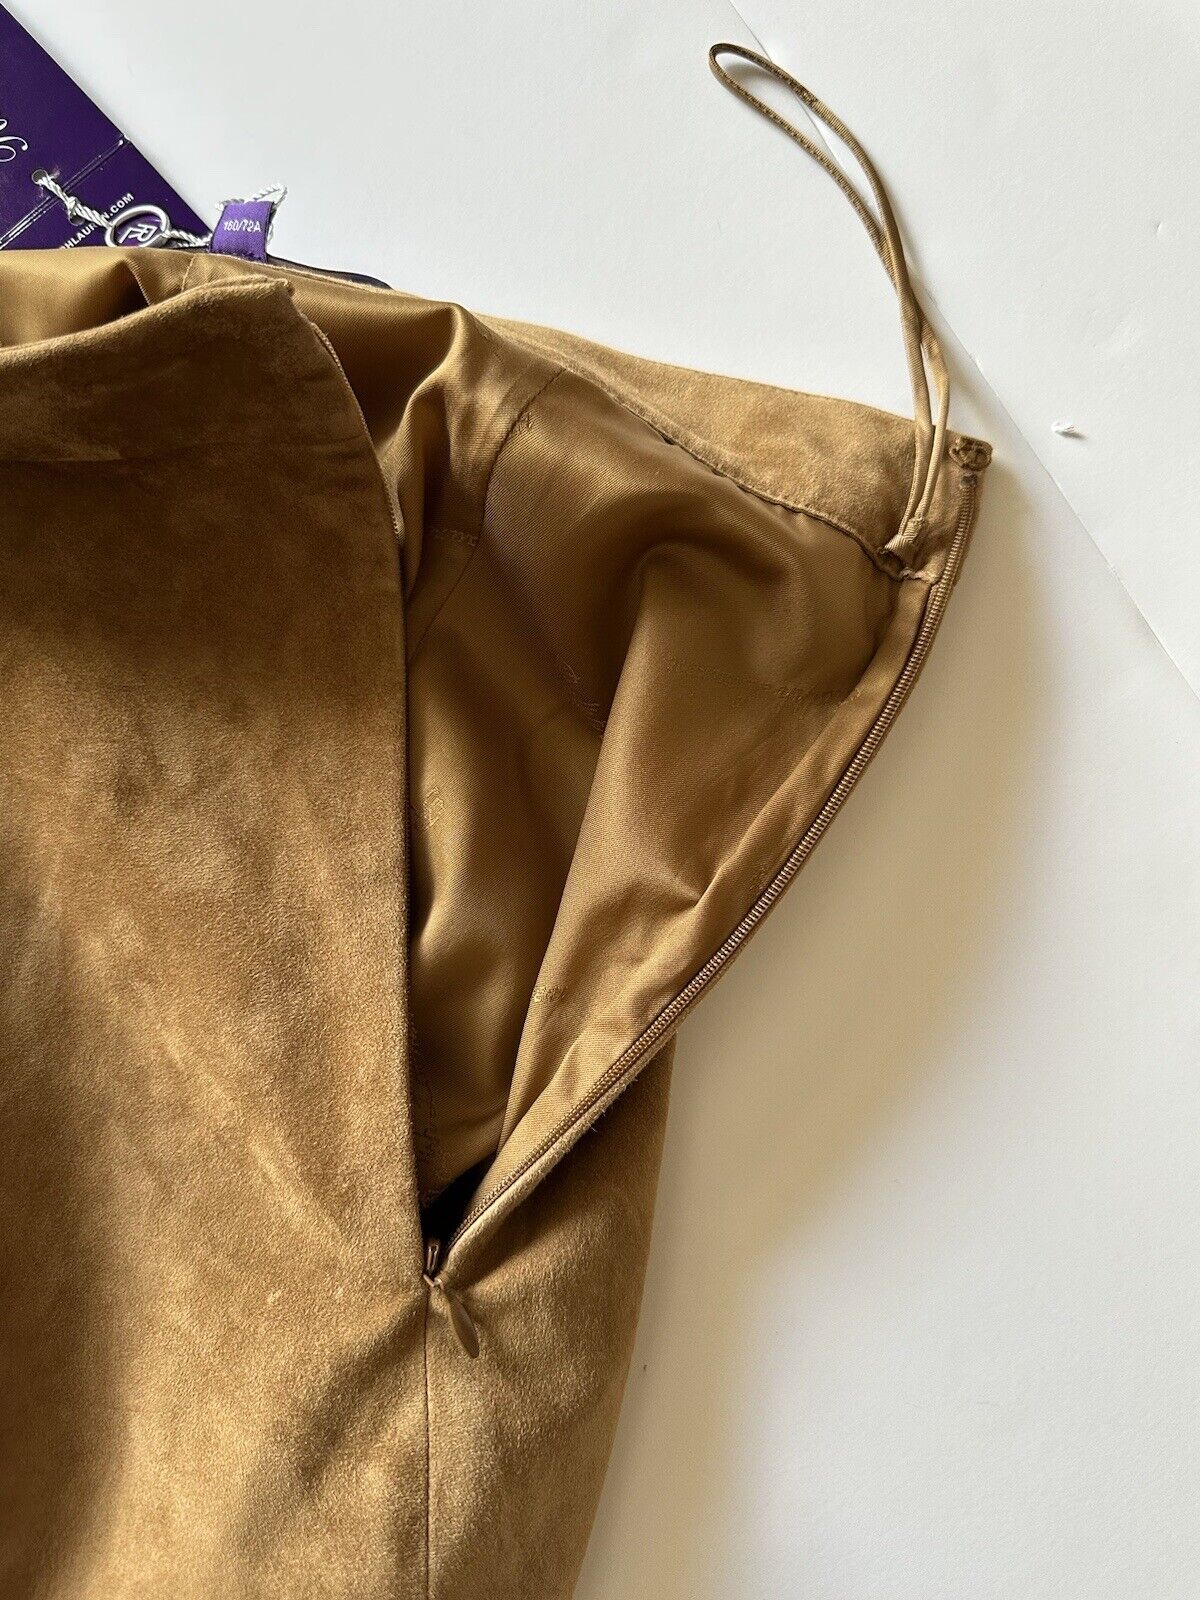 NWT 2890 долларов США Ralph Lauren Purple Label Замшевая коричневая юбка-трапеция 4 Сделано в США, Италия